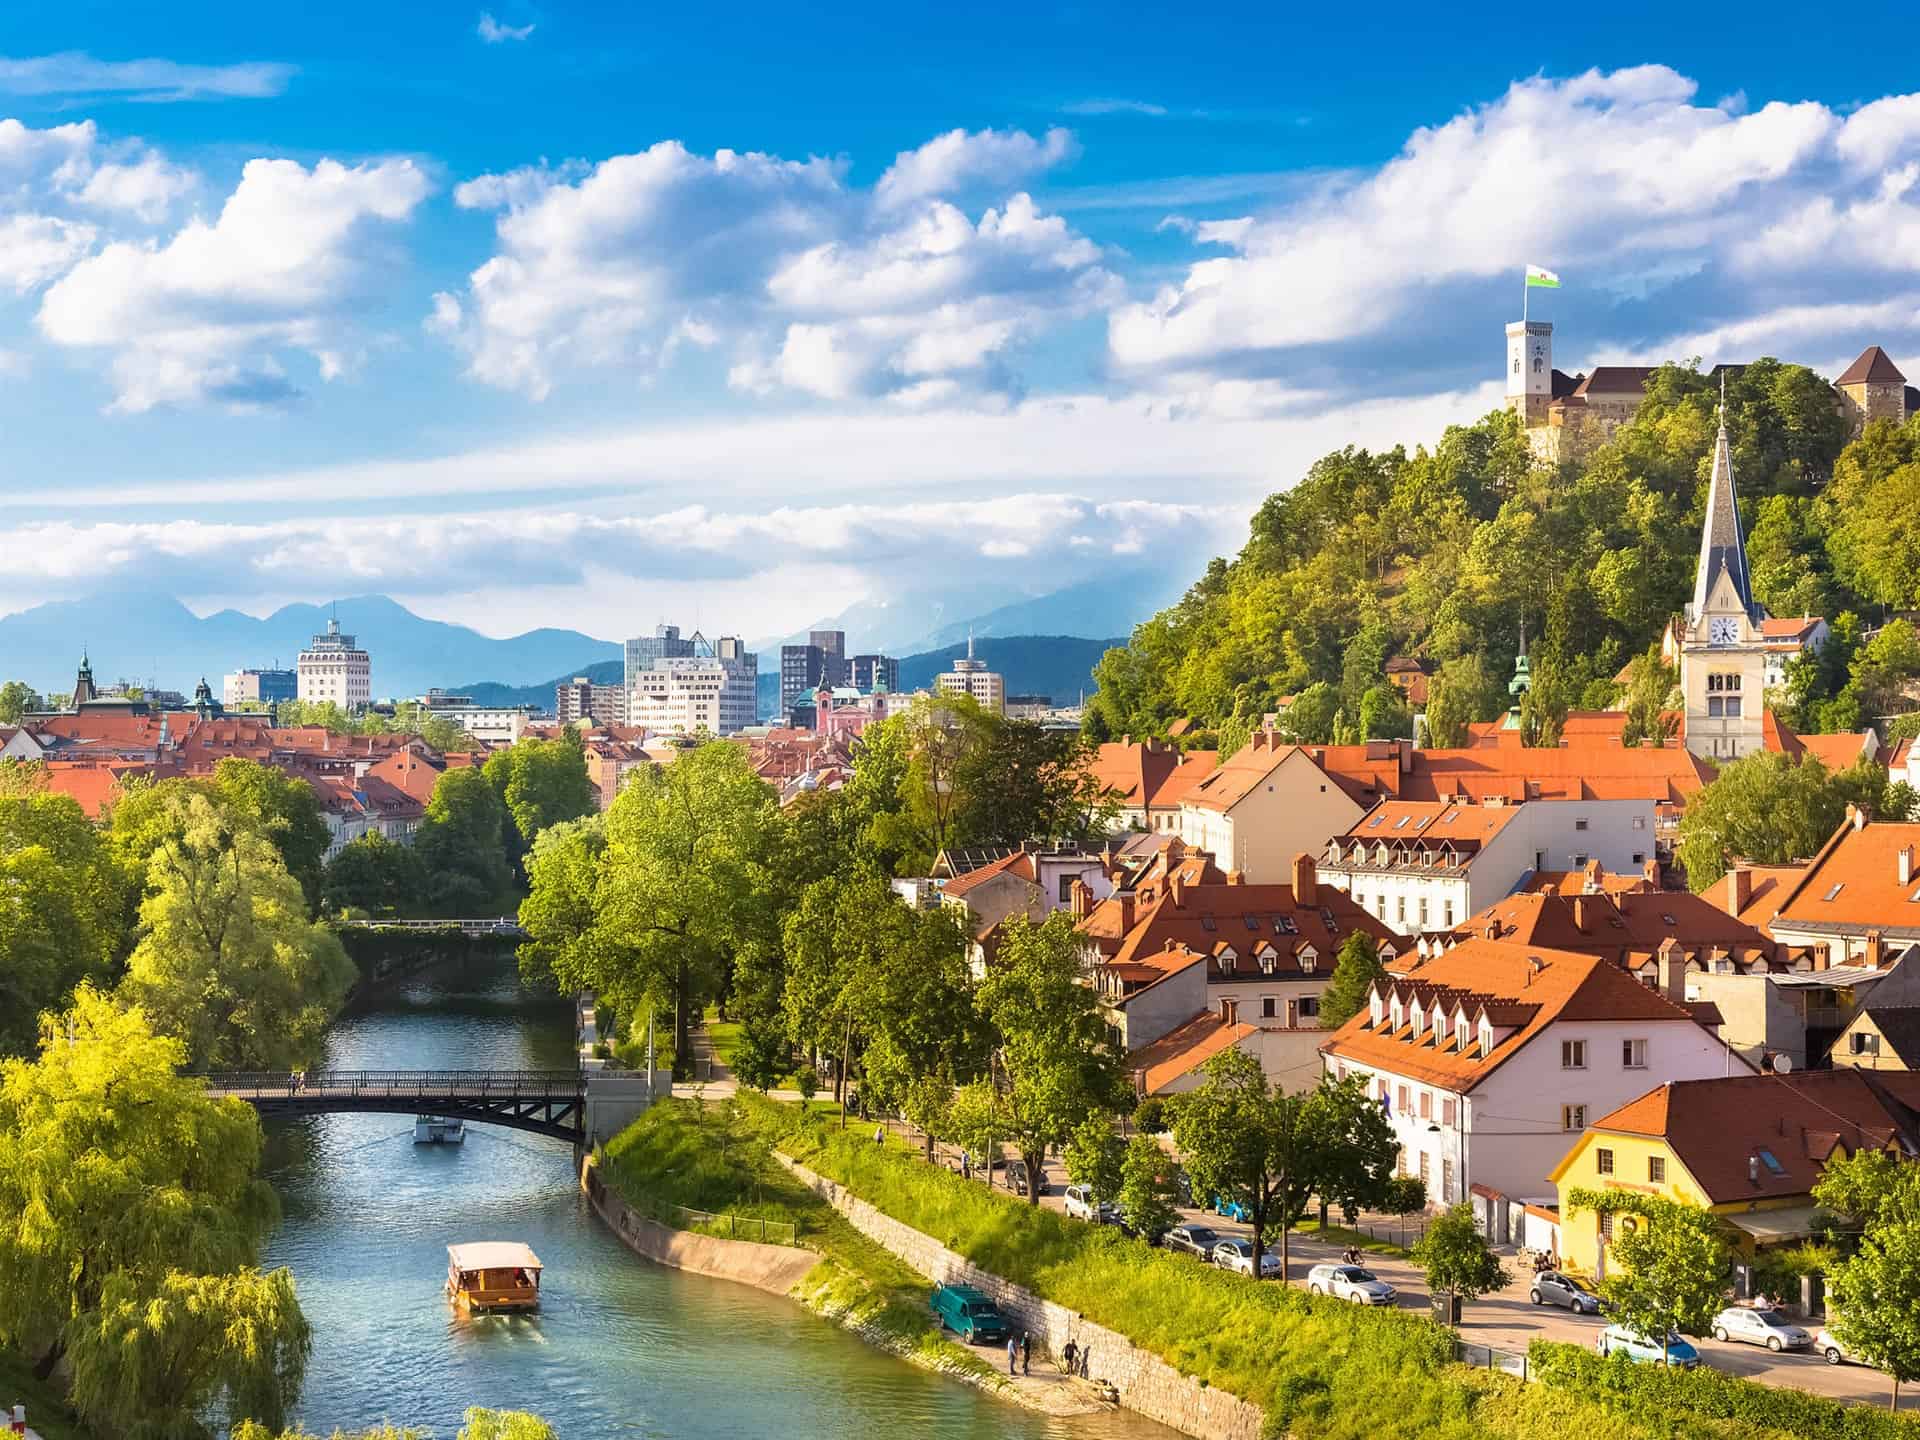 The city of Ljubljana